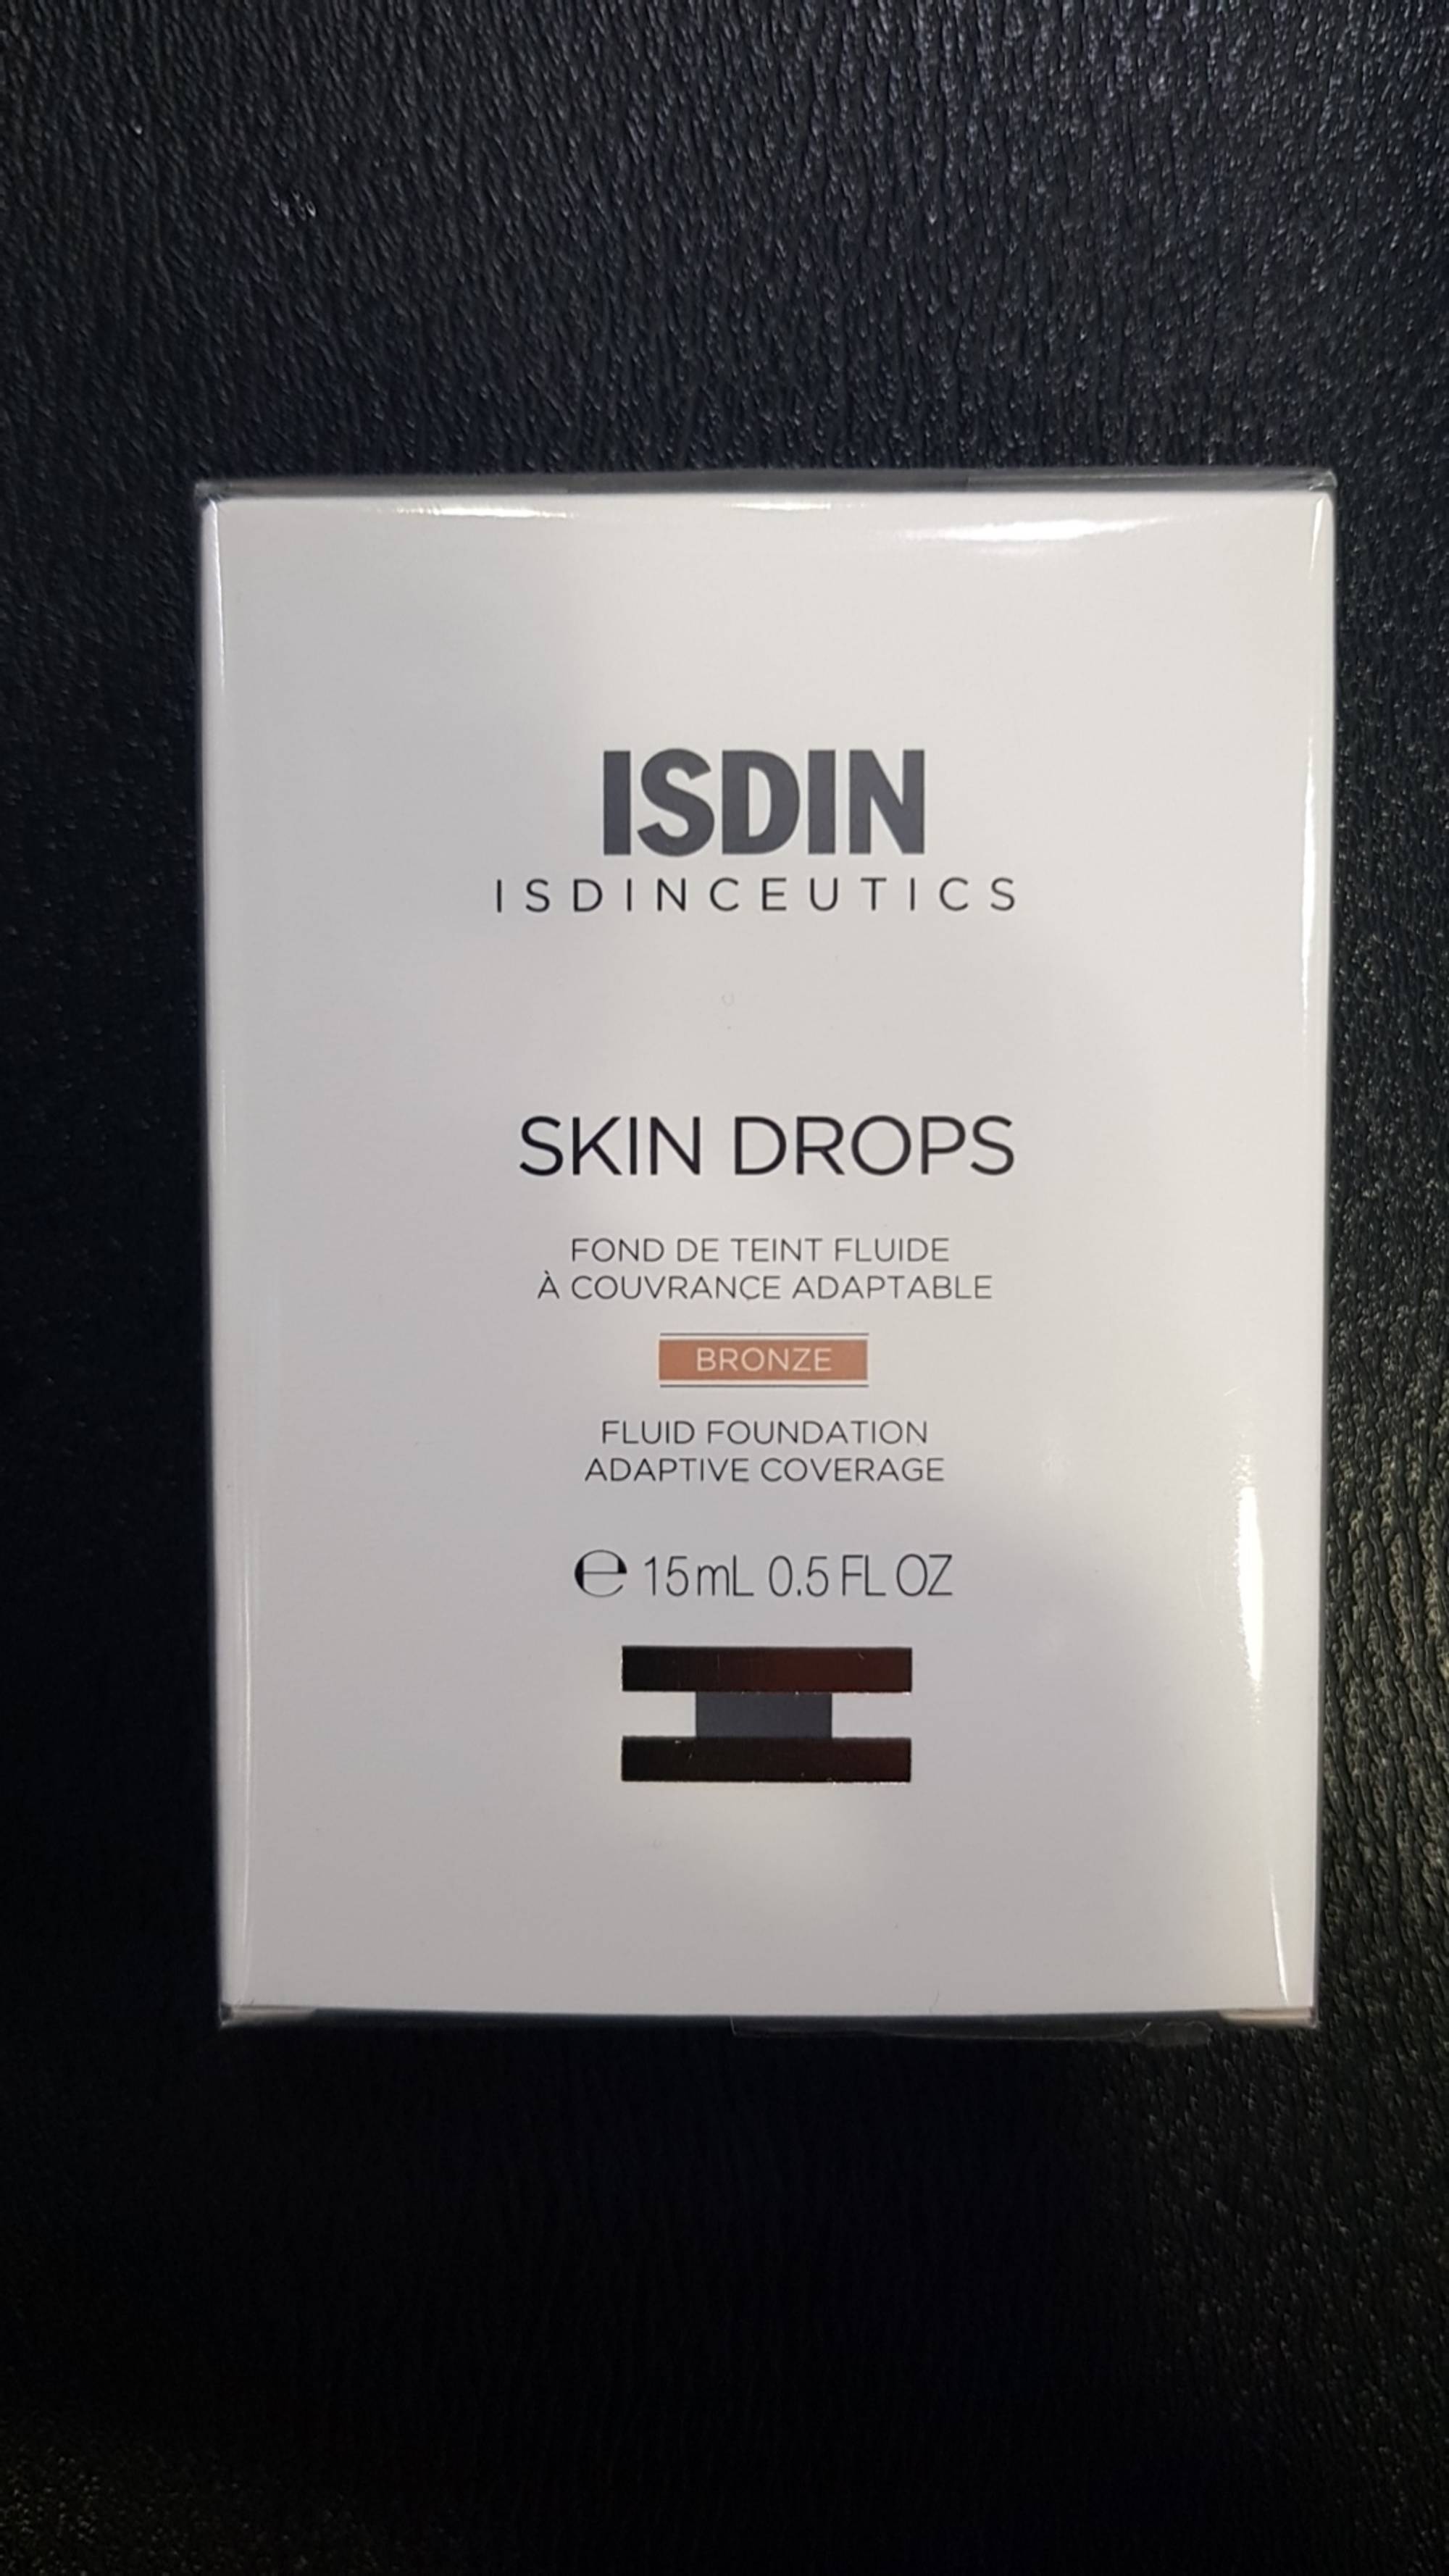 ISDIN - Skin drops - Fond de teint fluide bronze